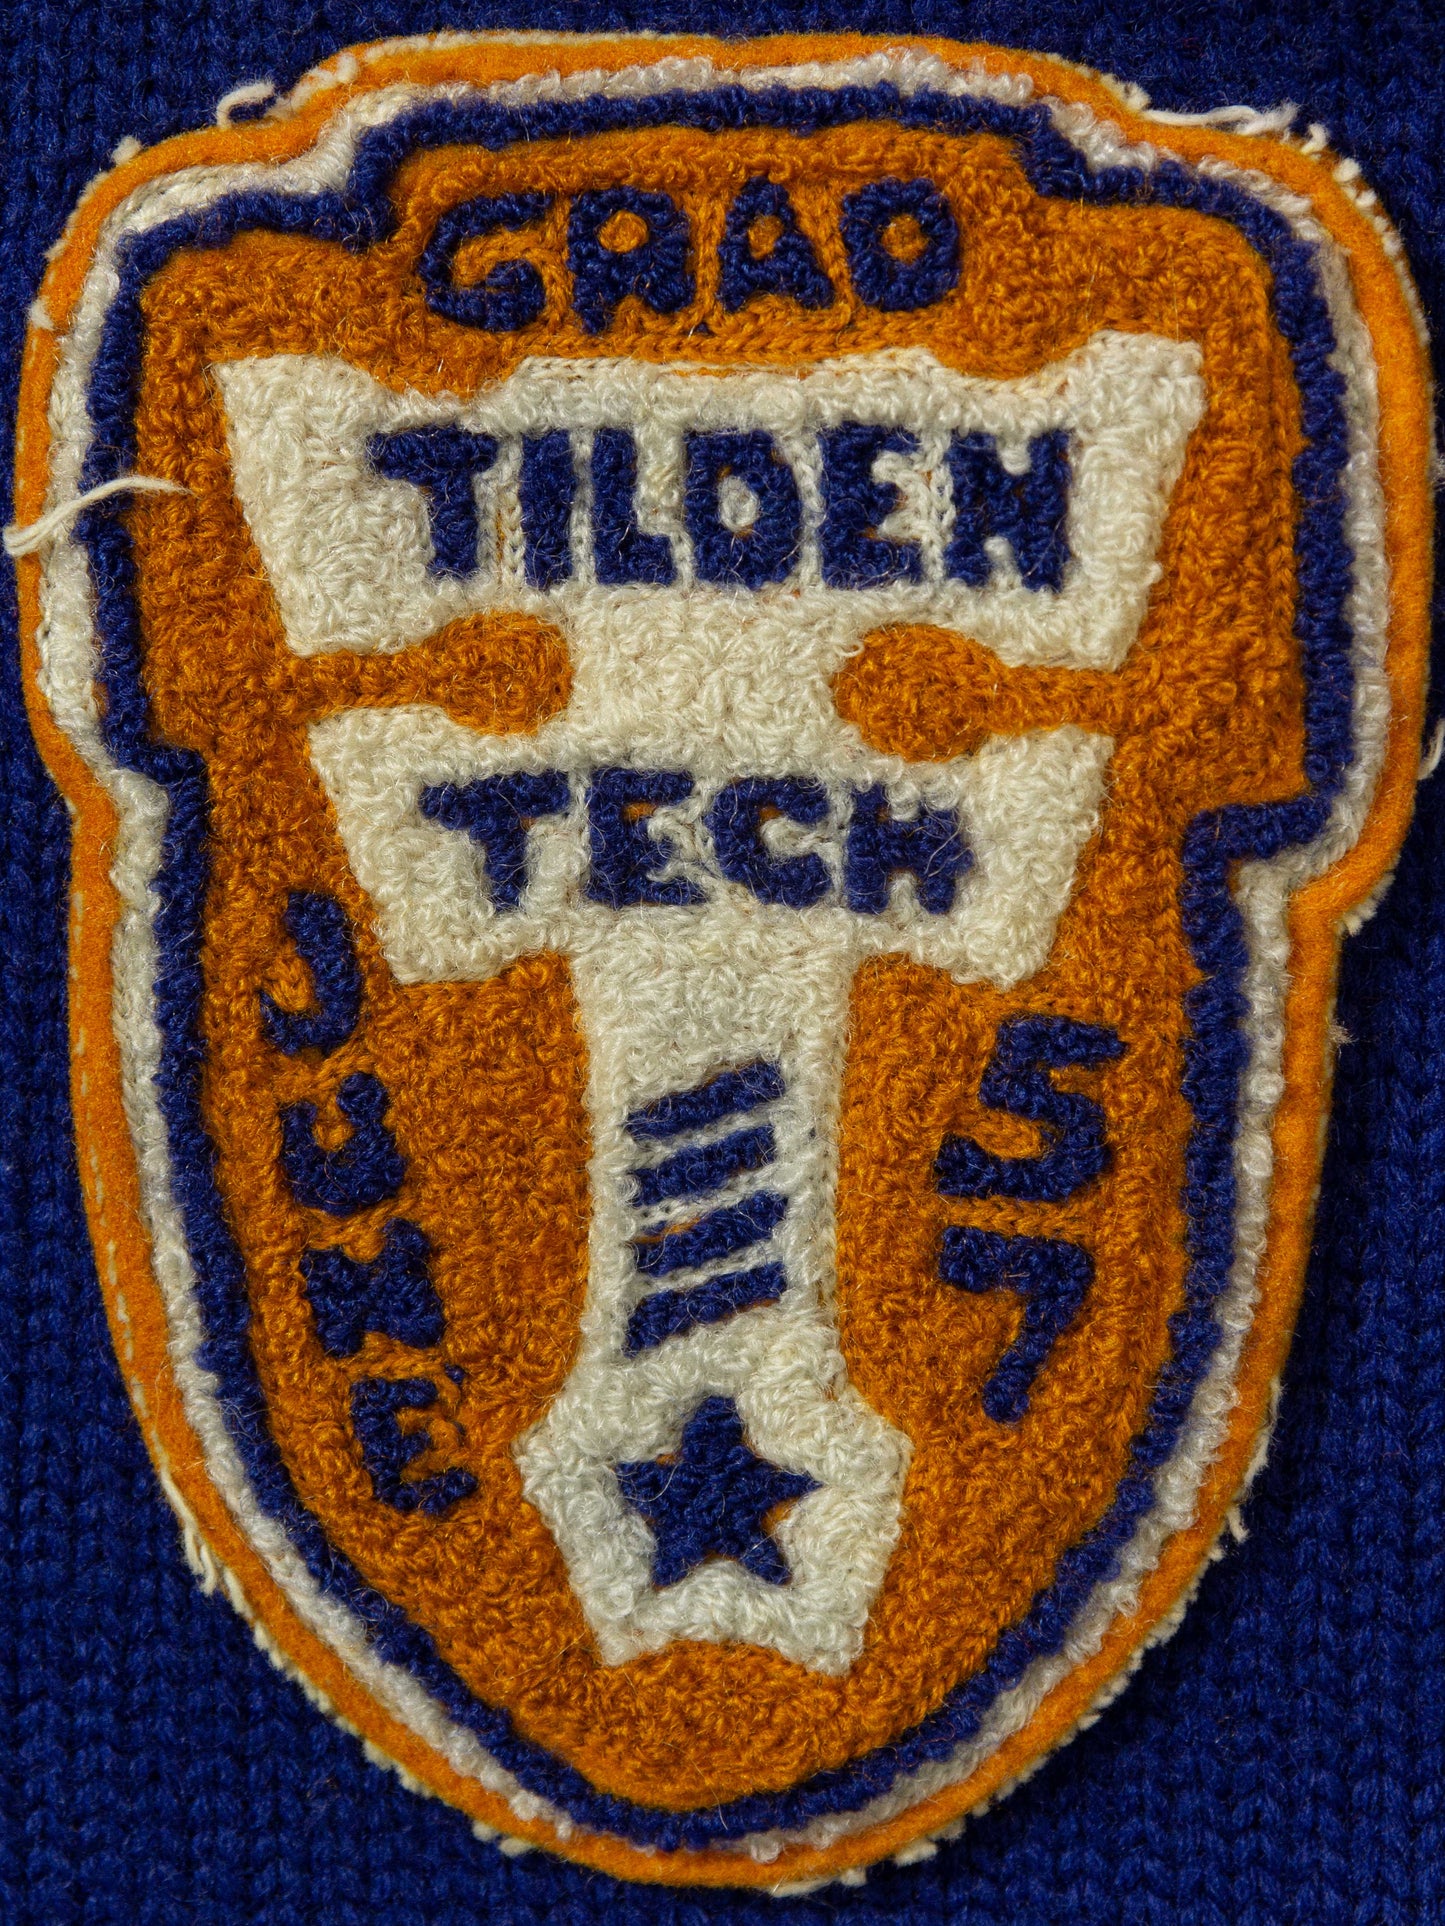 Vtg 1950s Tilden High School Cardigan - Made in USA (M)